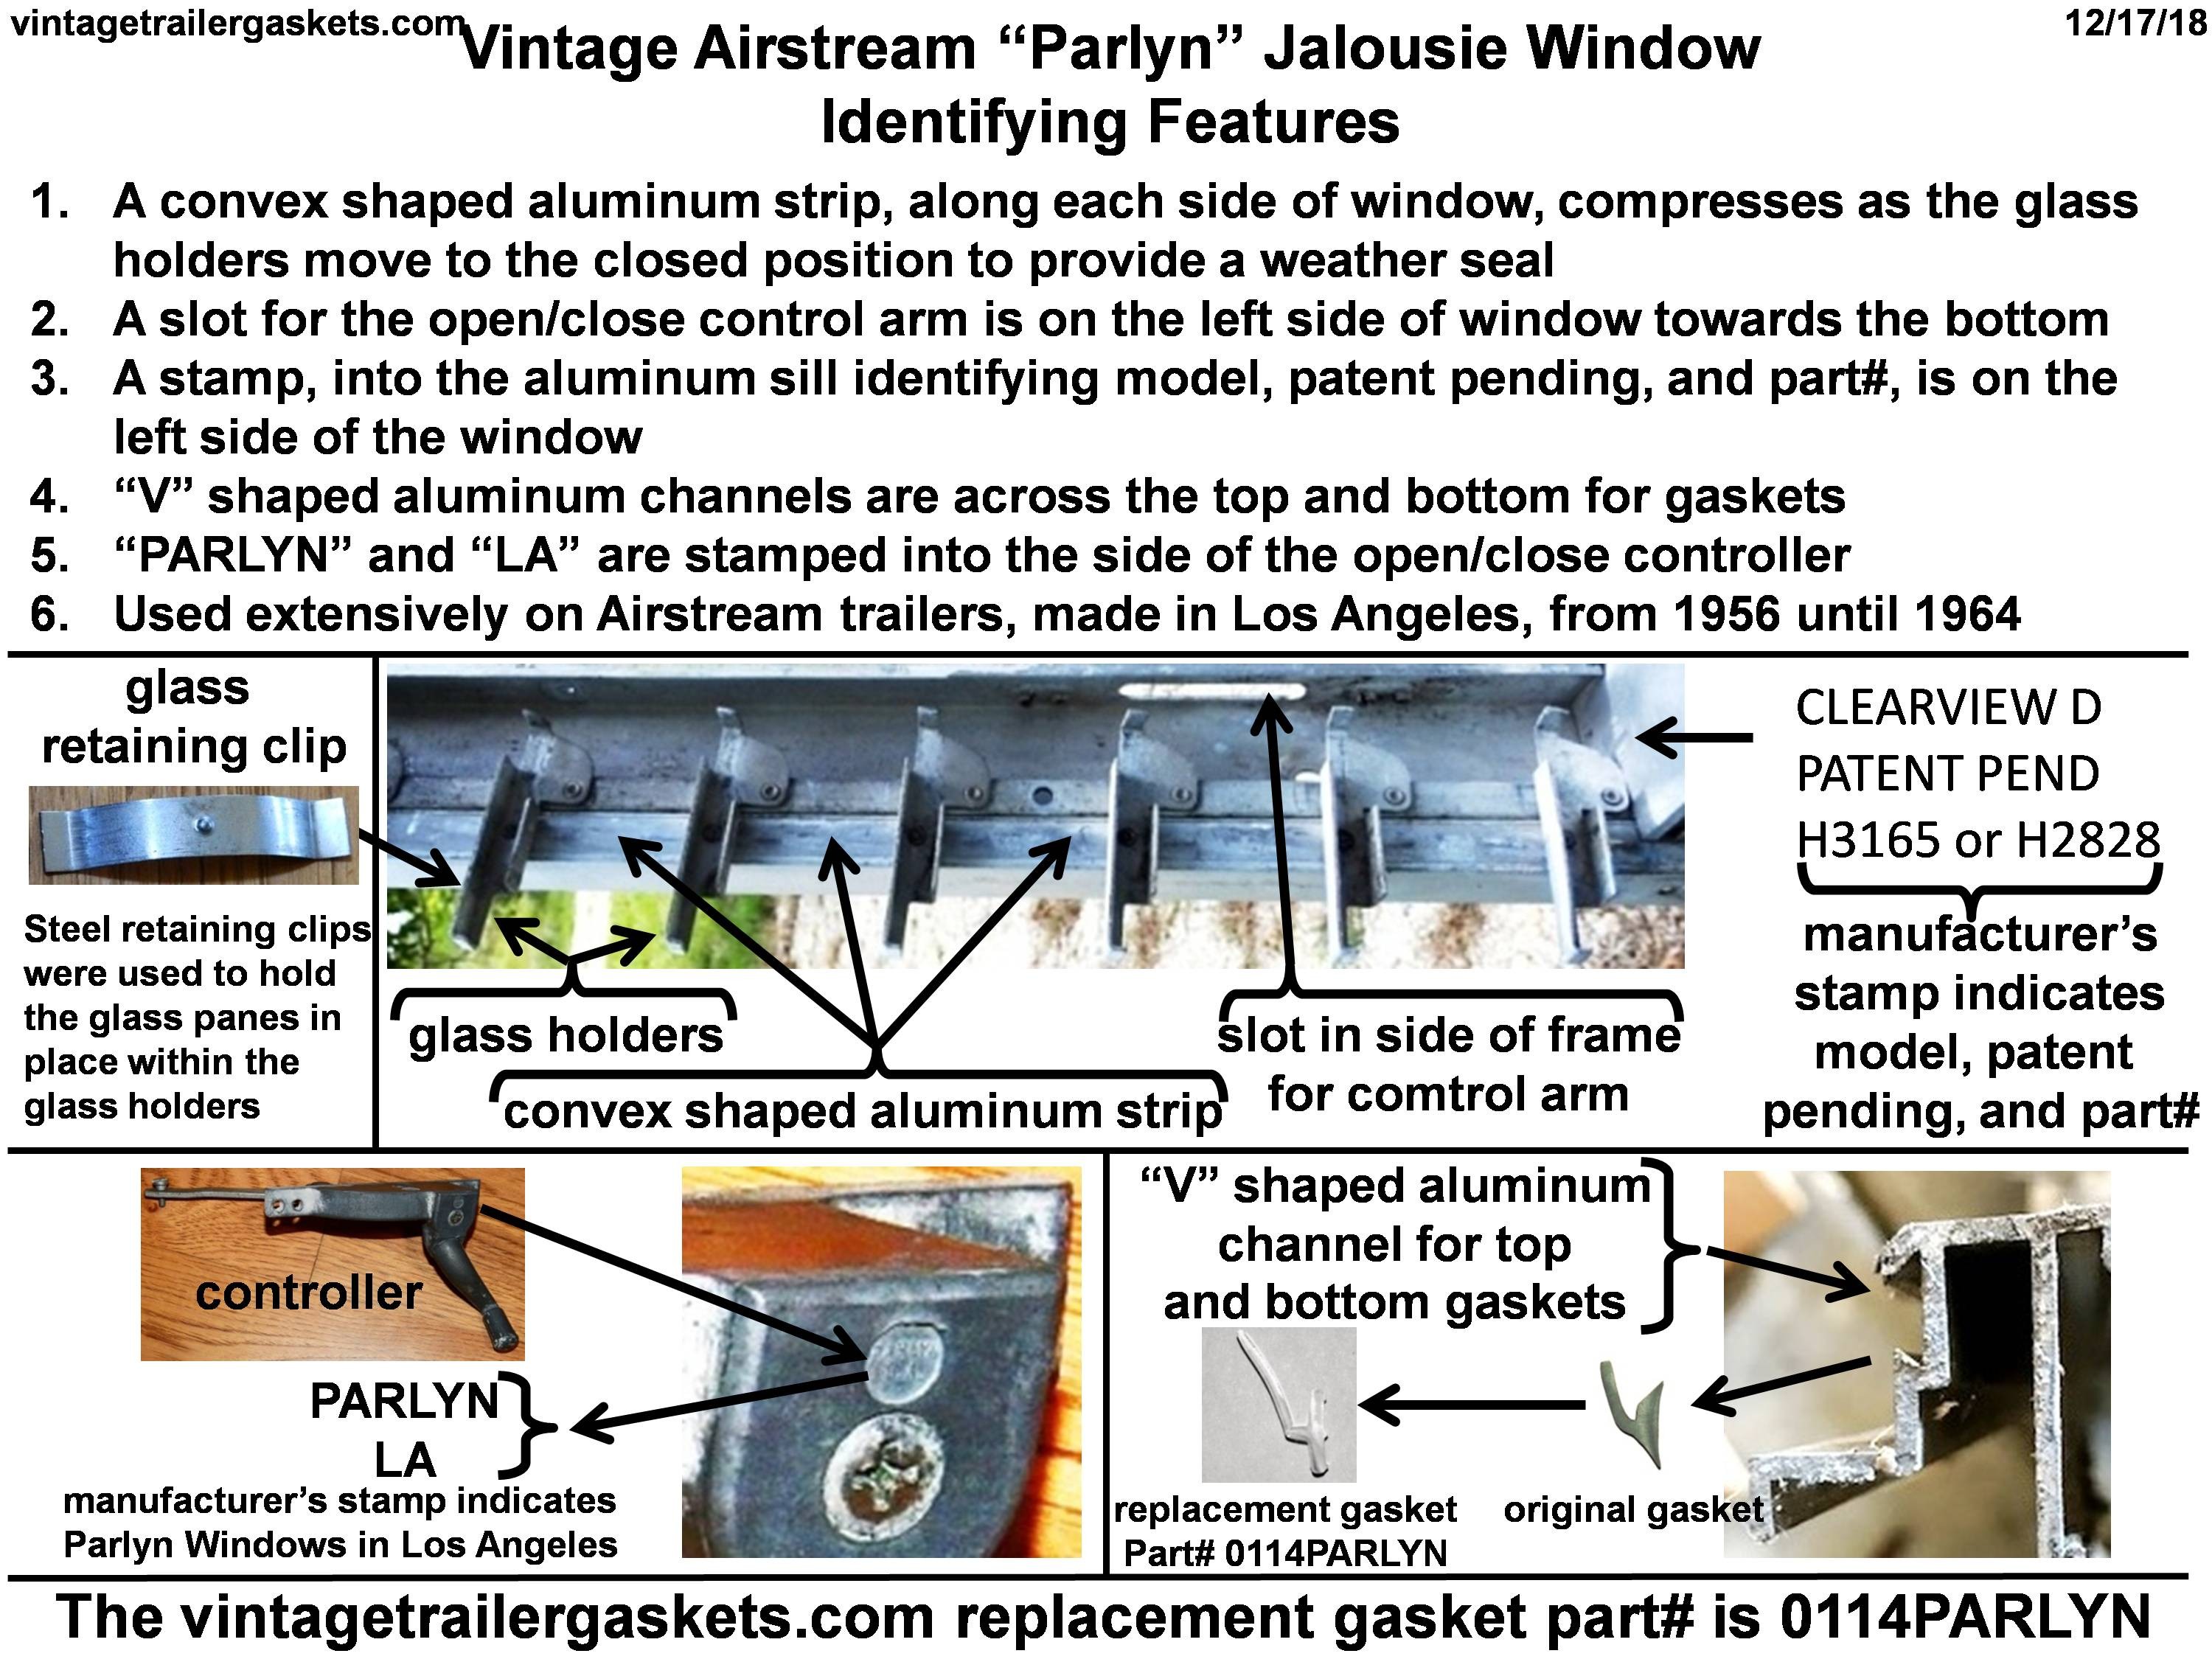 Airstream Parlyn Vintage Jalousie Window